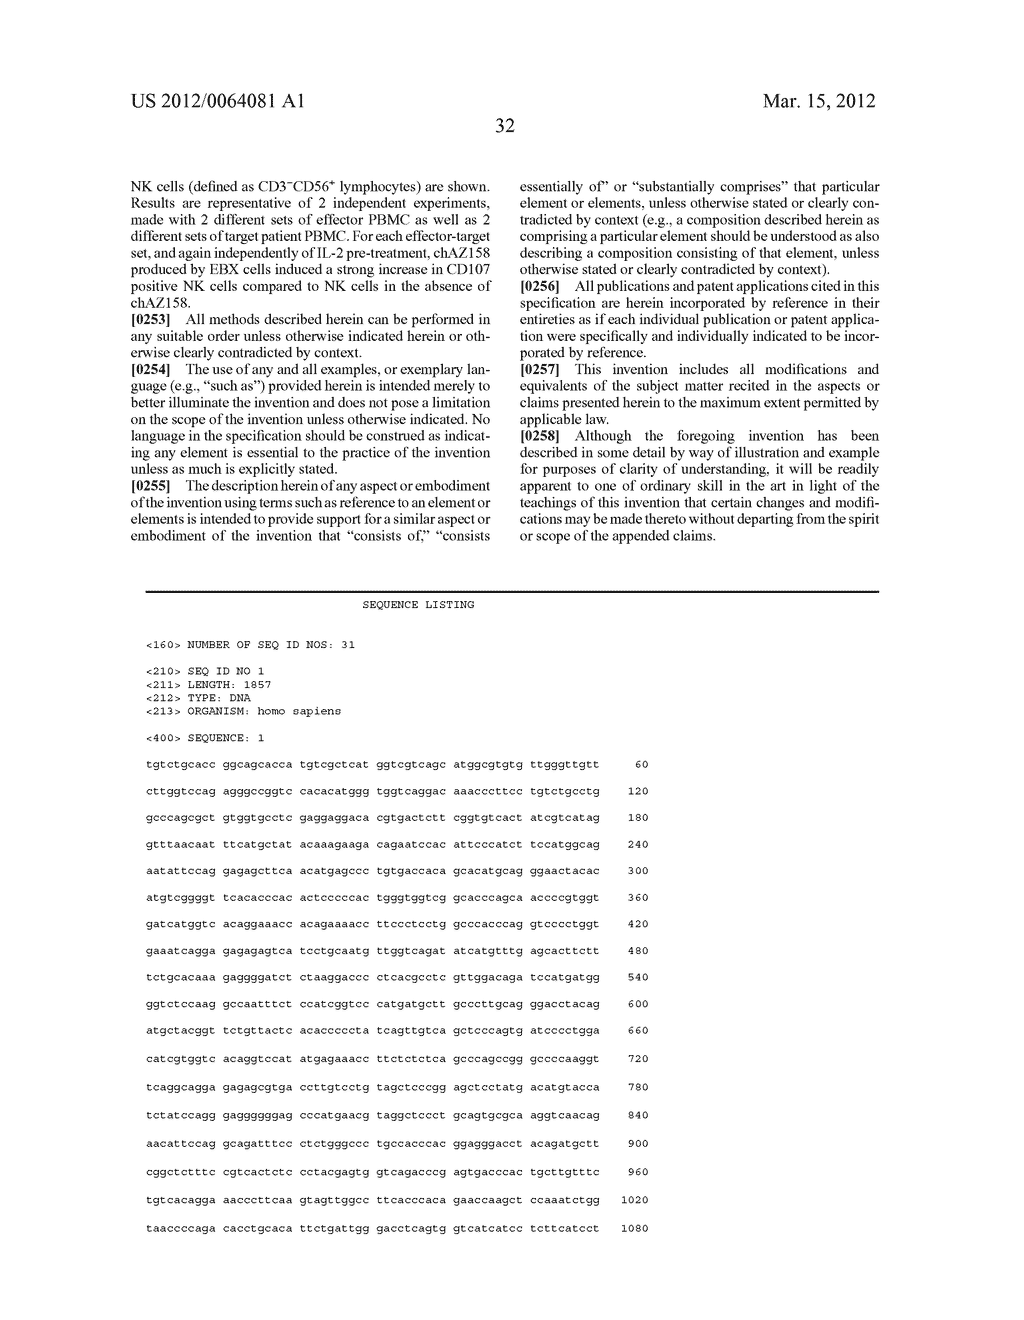 ANTI-KIR3D ANTIBODIES - diagram, schematic, and image 49